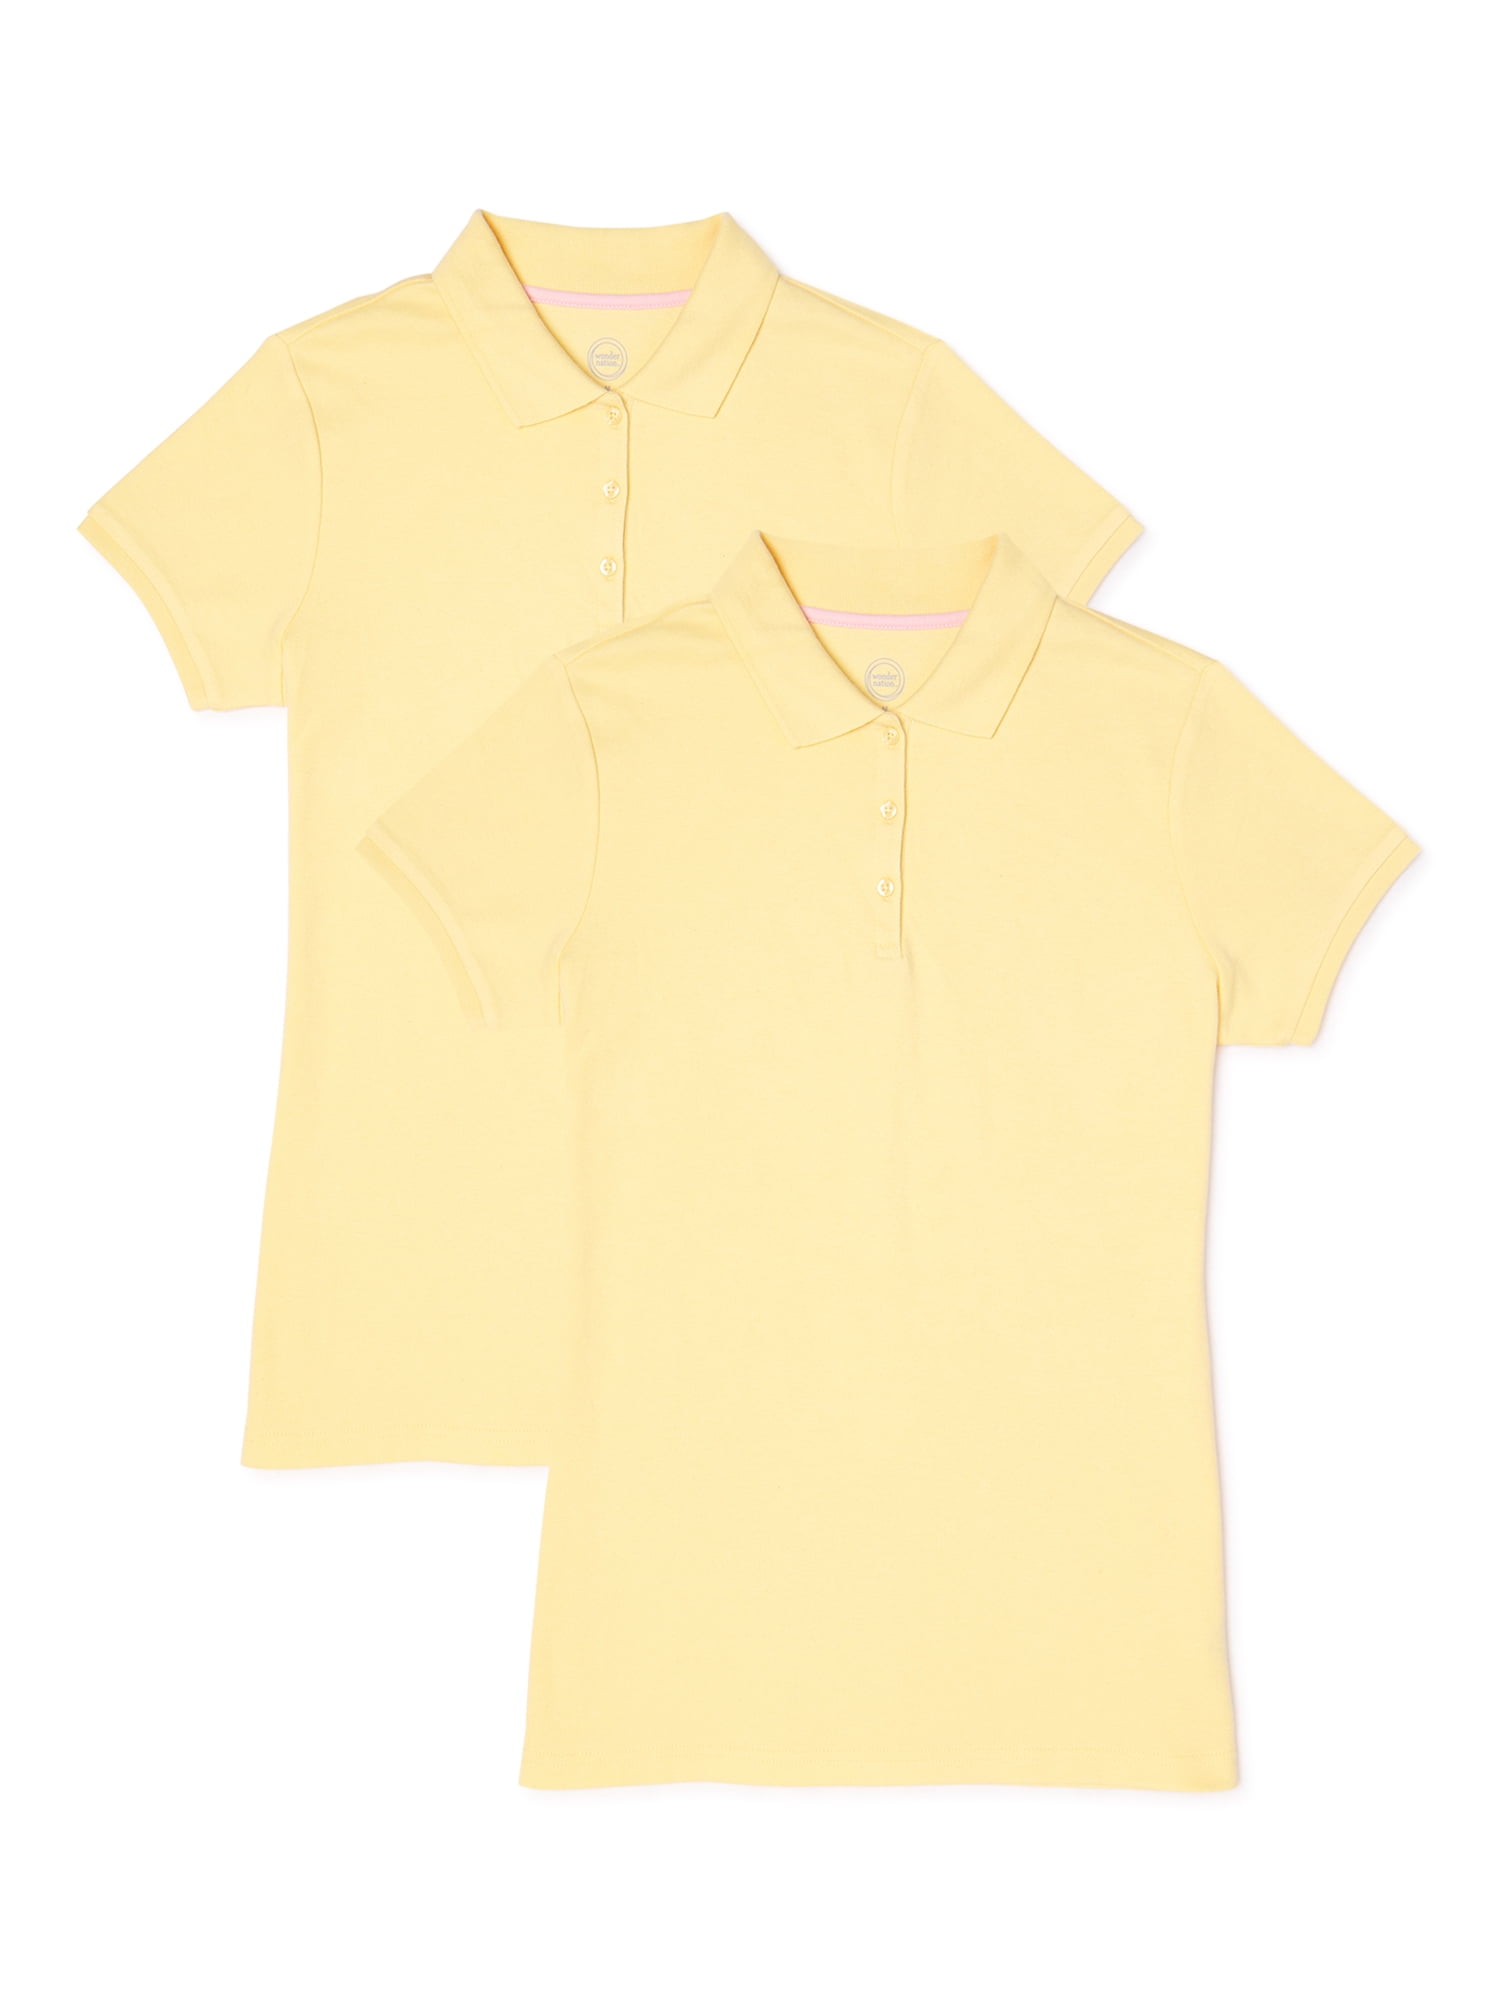 Børnecenter Mansion Spænde Wonder Nation Girls School Uniform Short Sleeve Interlock Polo Shirt,  2-Pack, Sizes 4-18 - Walmart.com